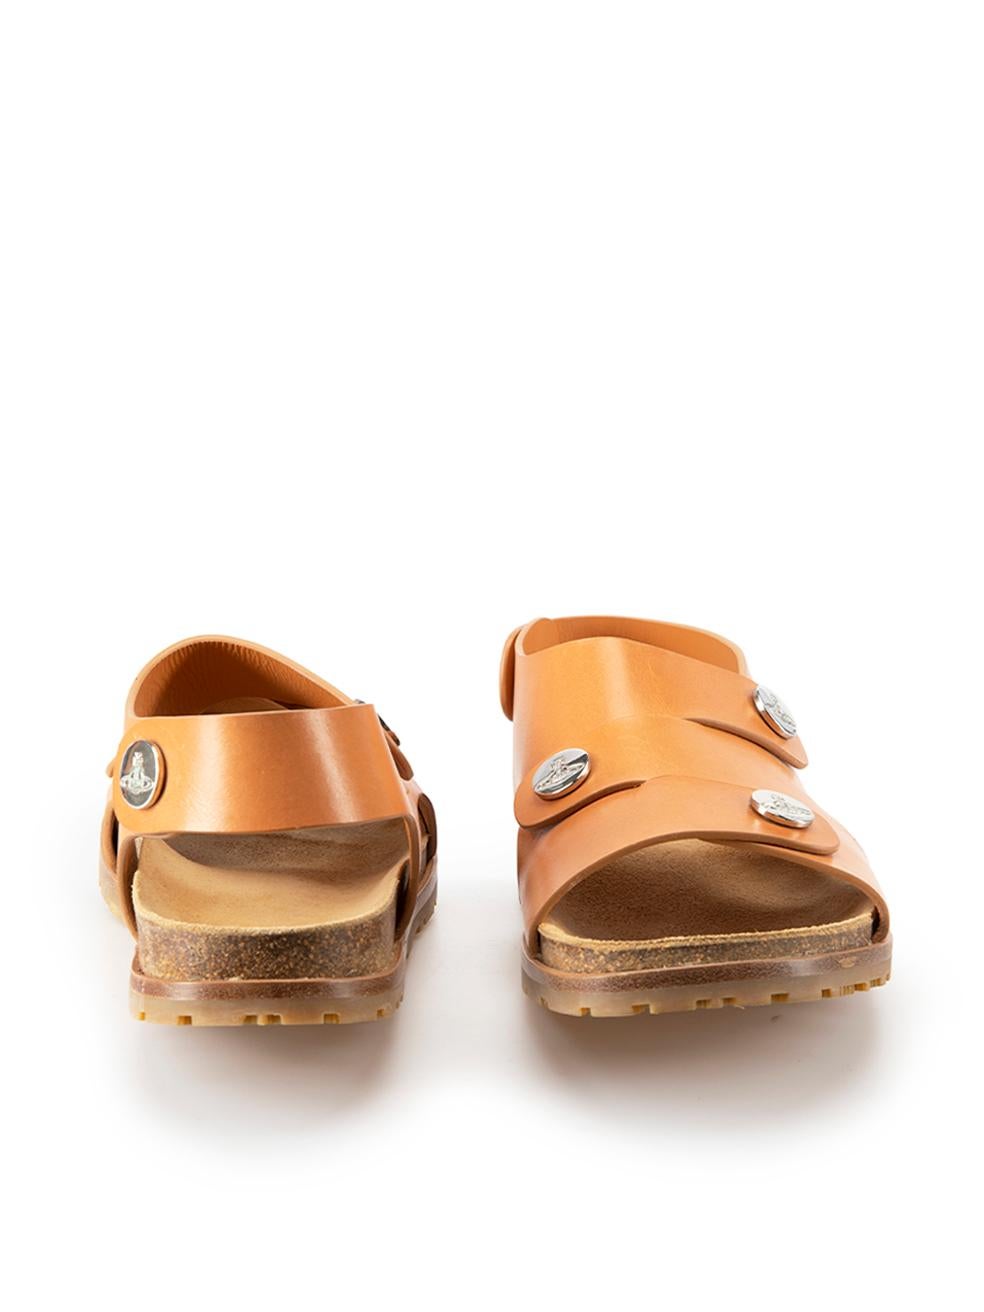 Vivienne Westwood Brown Leather Flintstone Trek Sandals Size IT 40 In Good Condition For Sale In London, GB